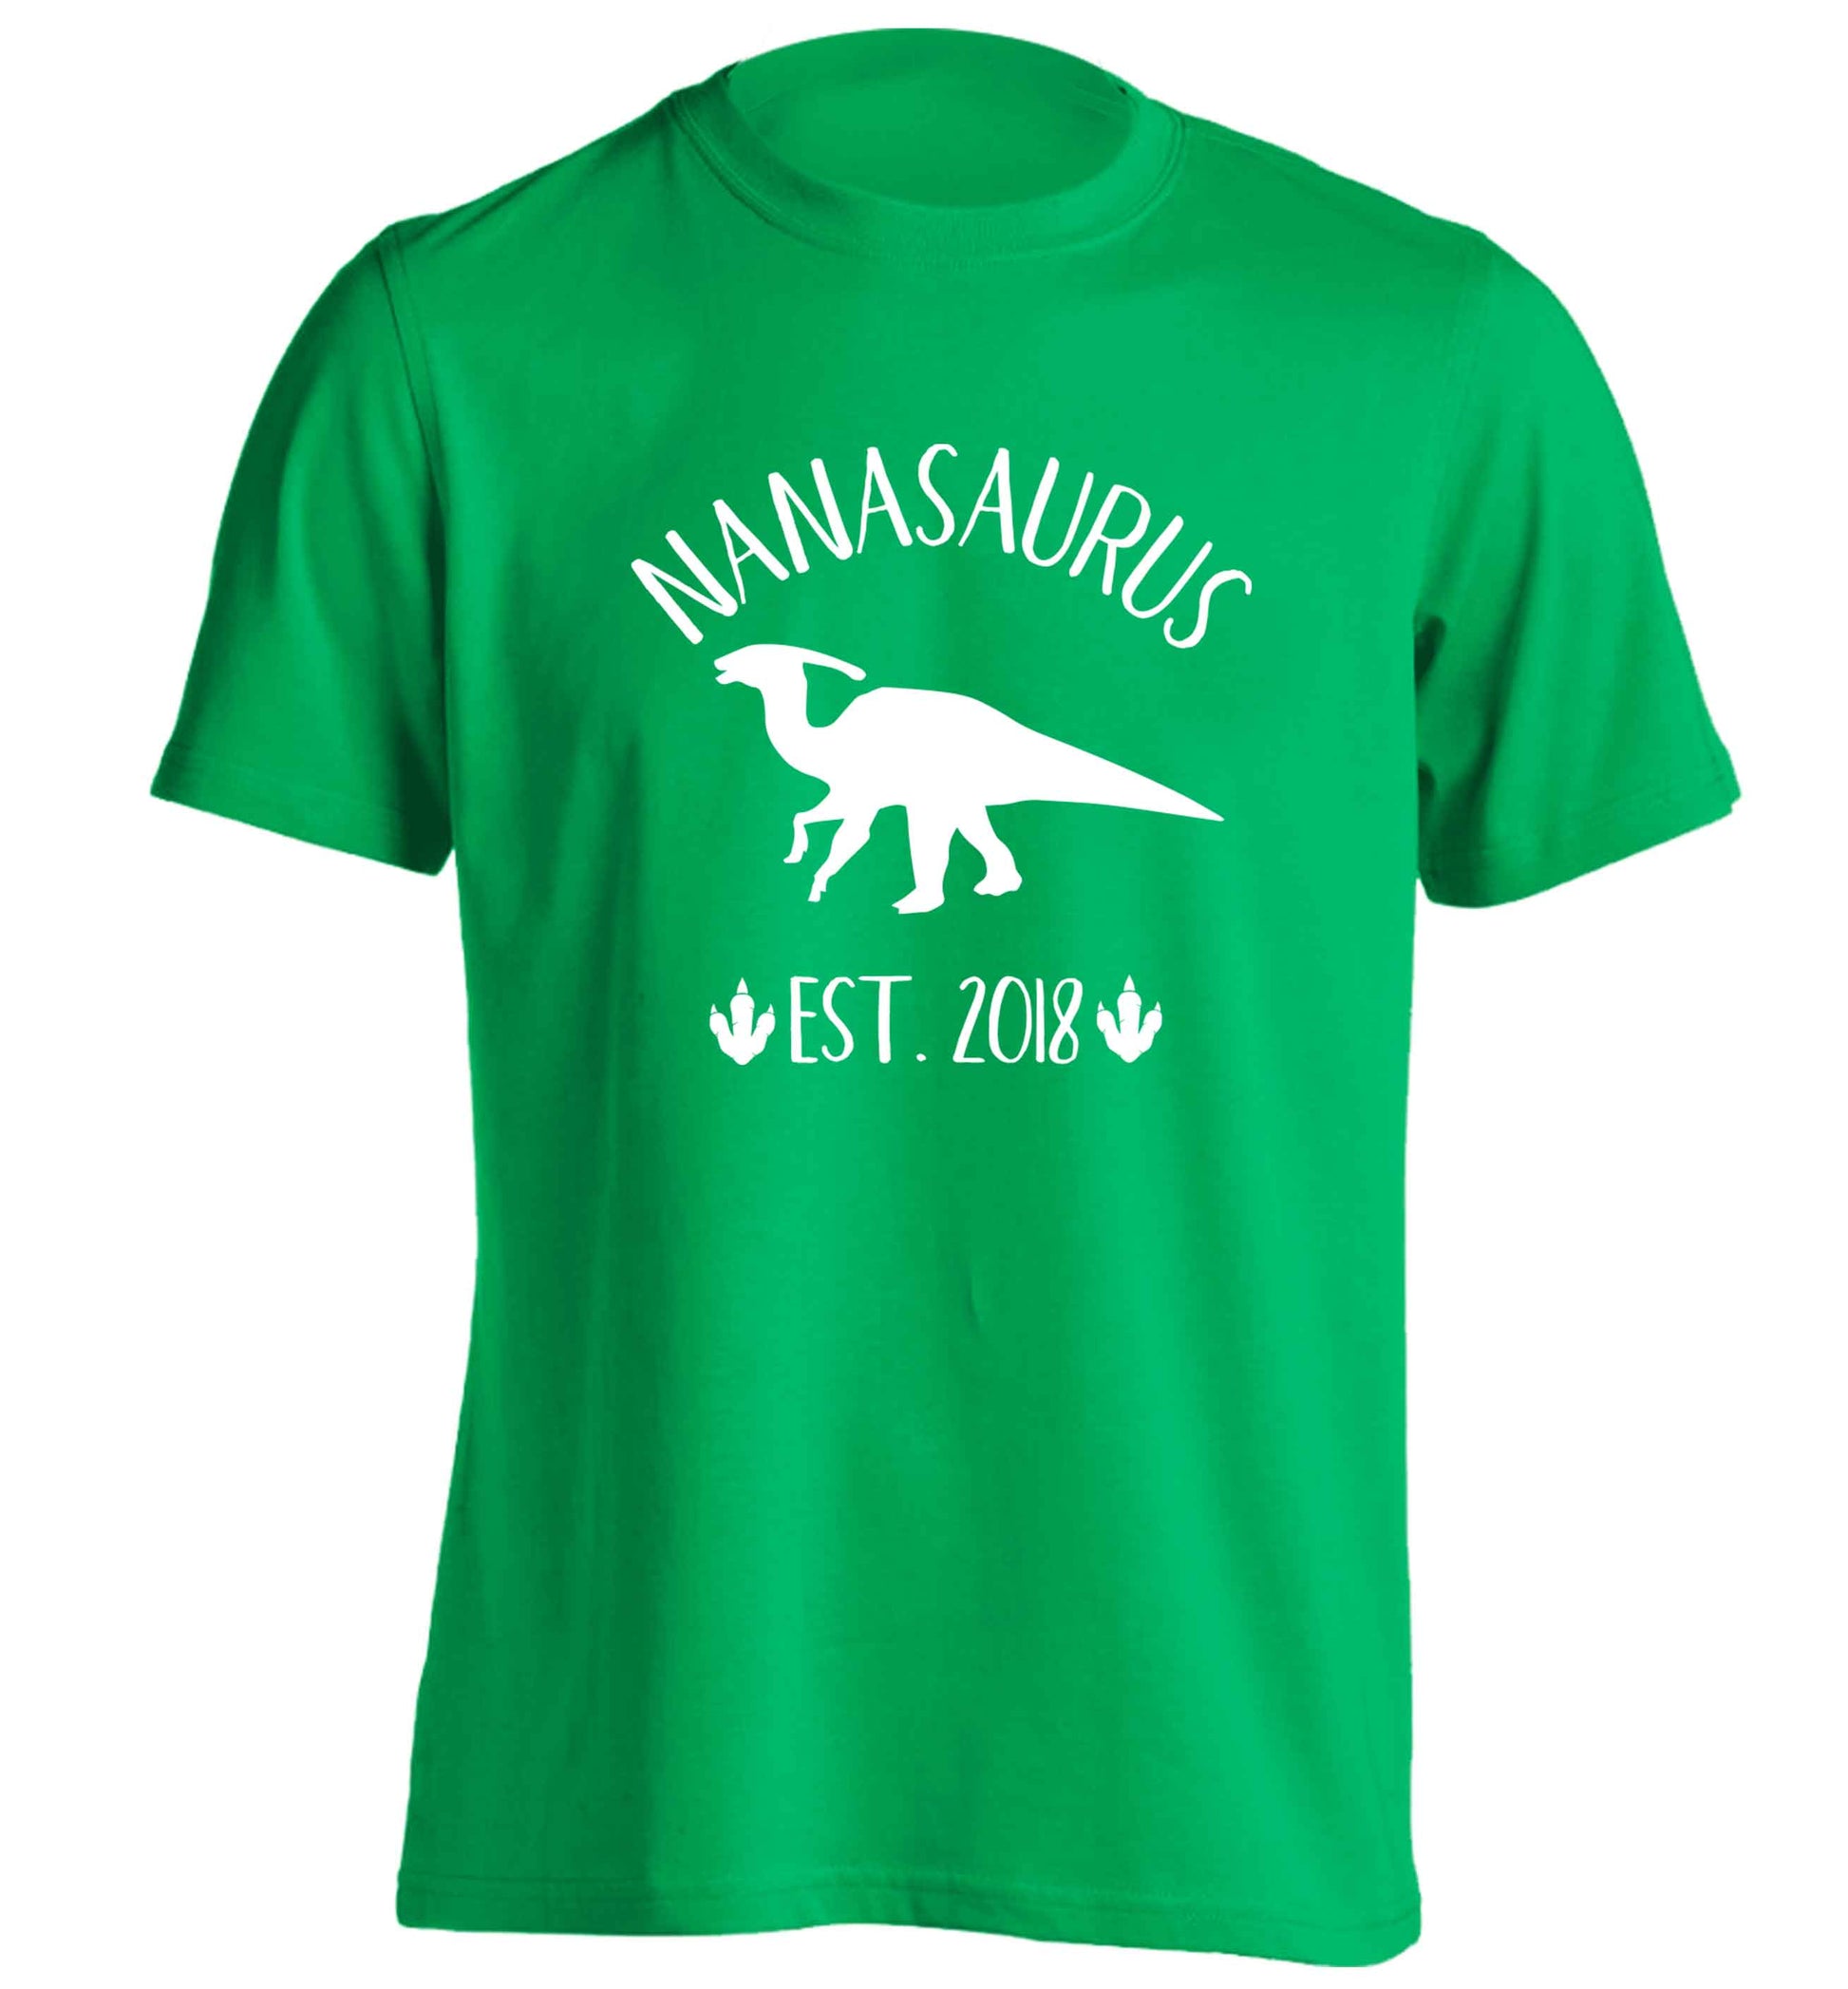 Personalised nanasaurus since (custom date) adults unisex green Tshirt 2XL